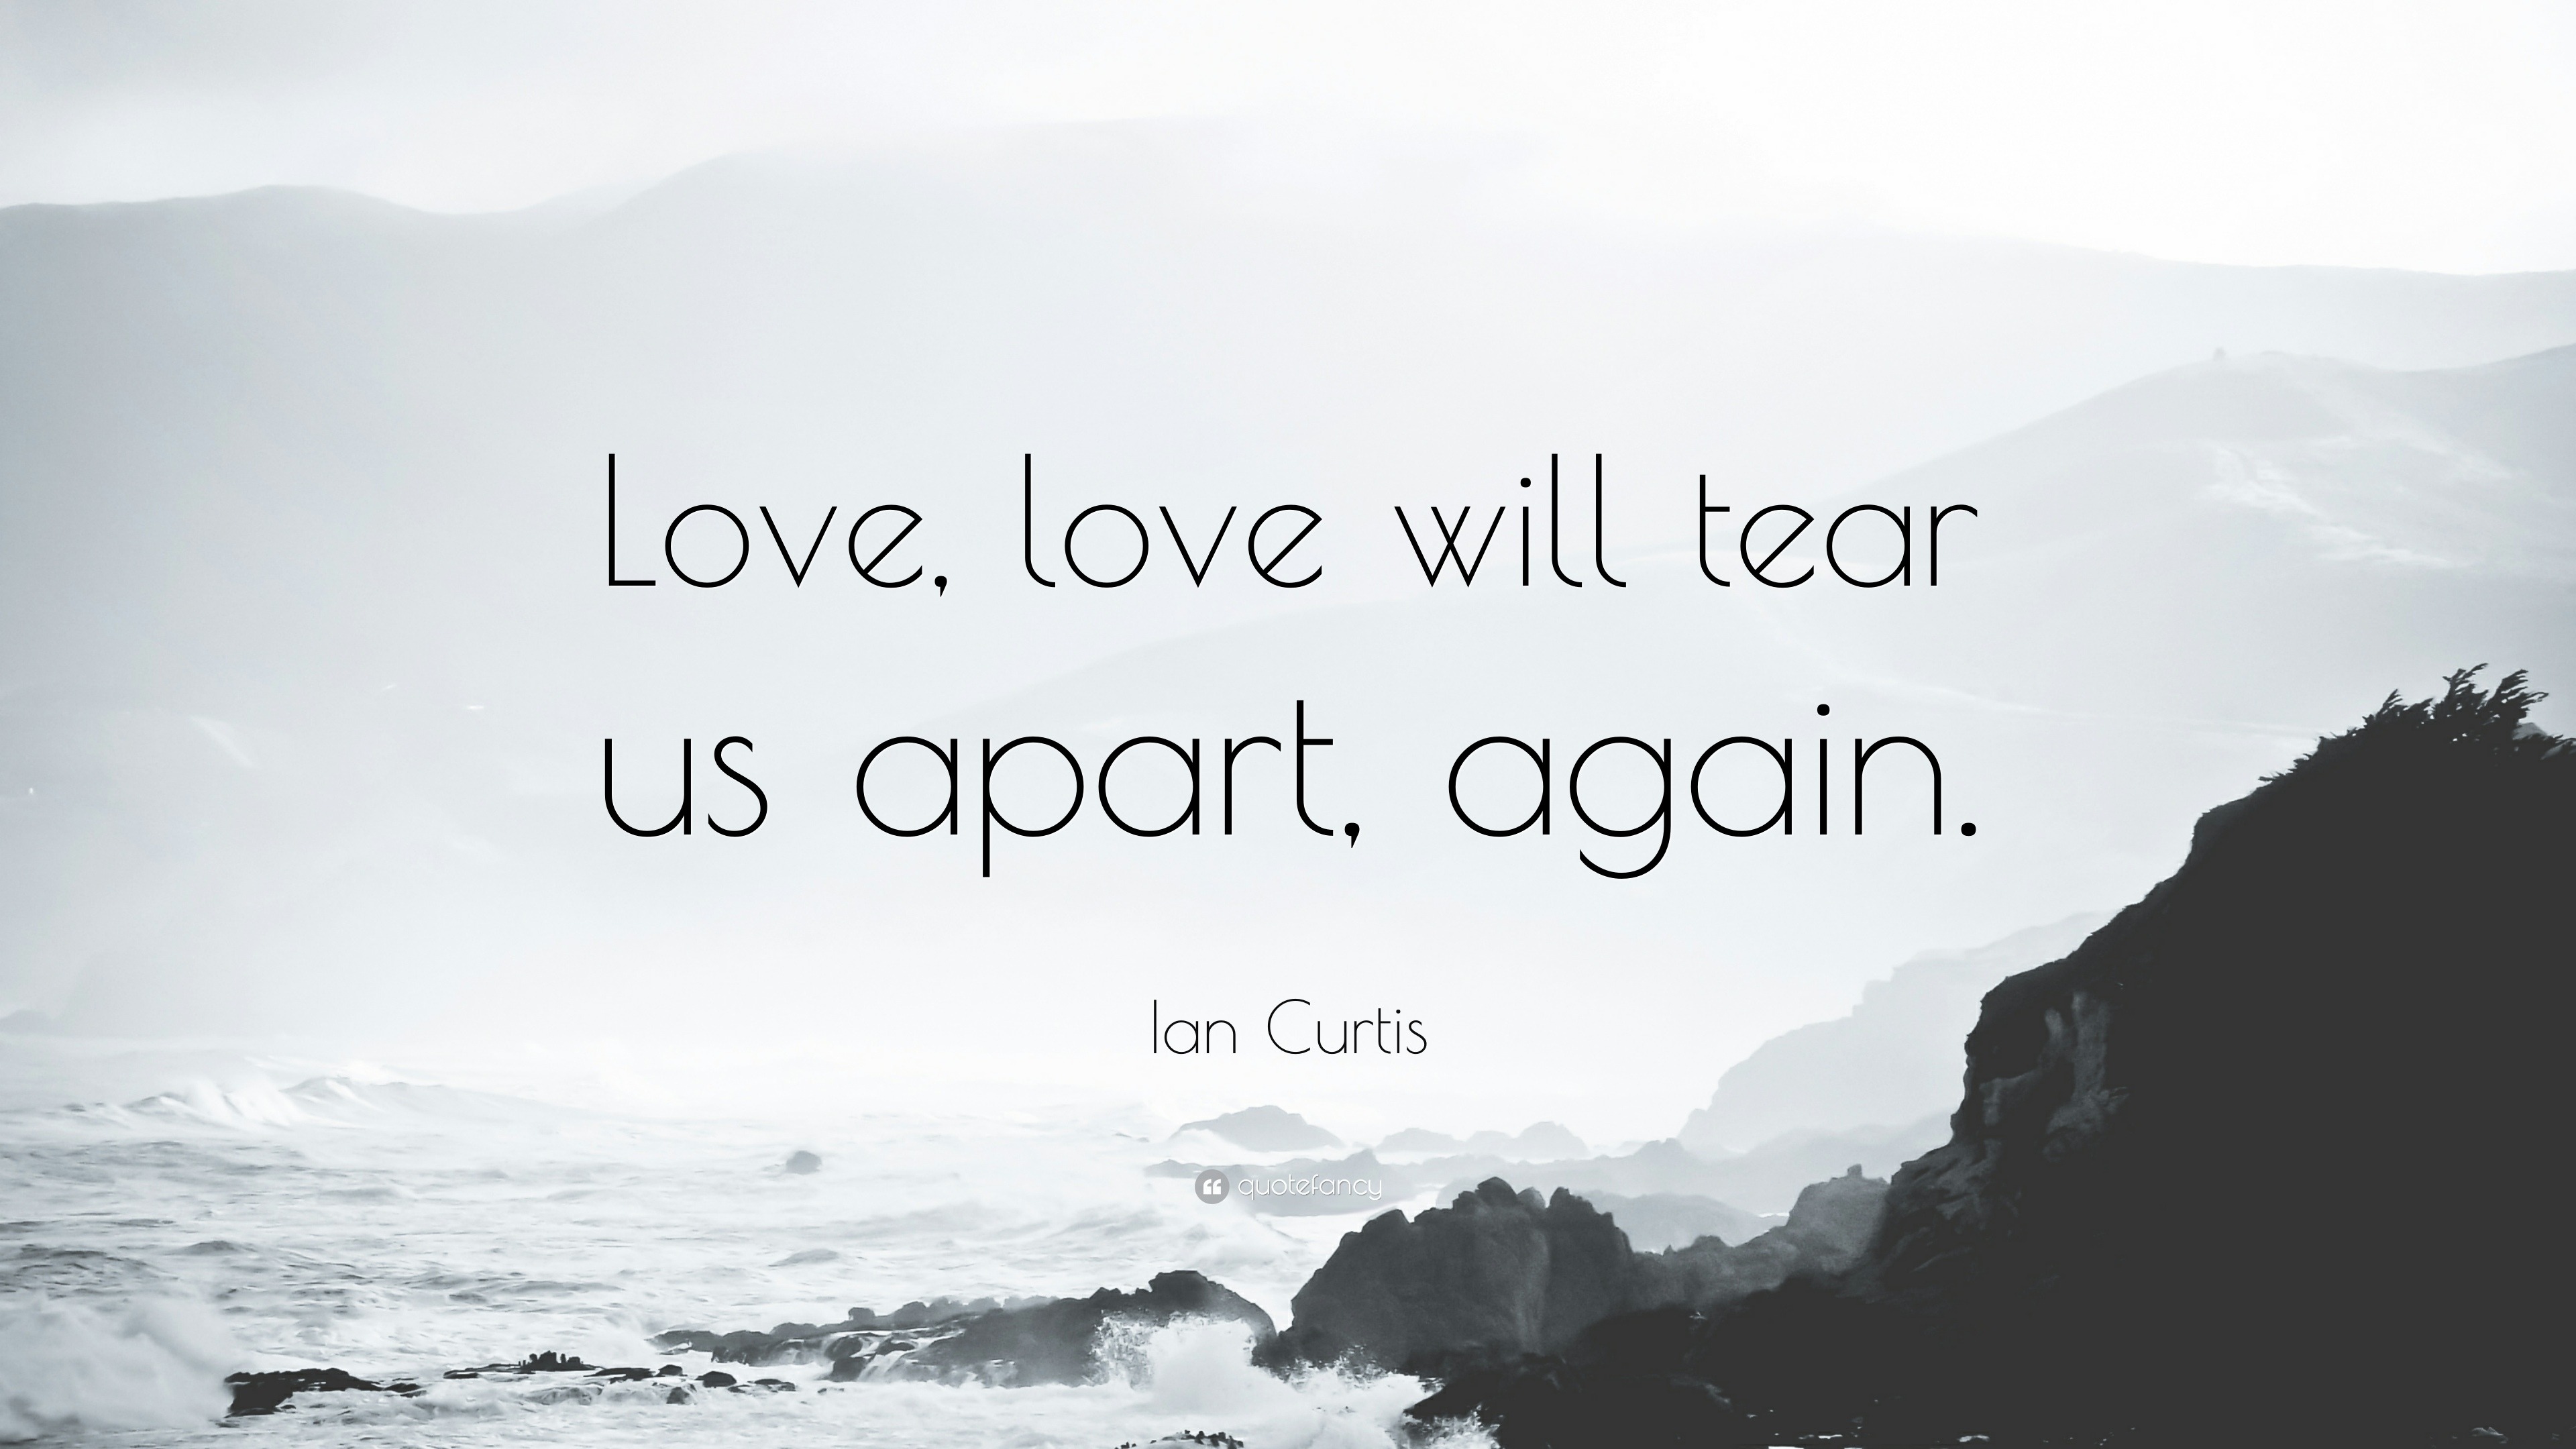 Ian Curtis Quote “Love love will tear us apart again ”